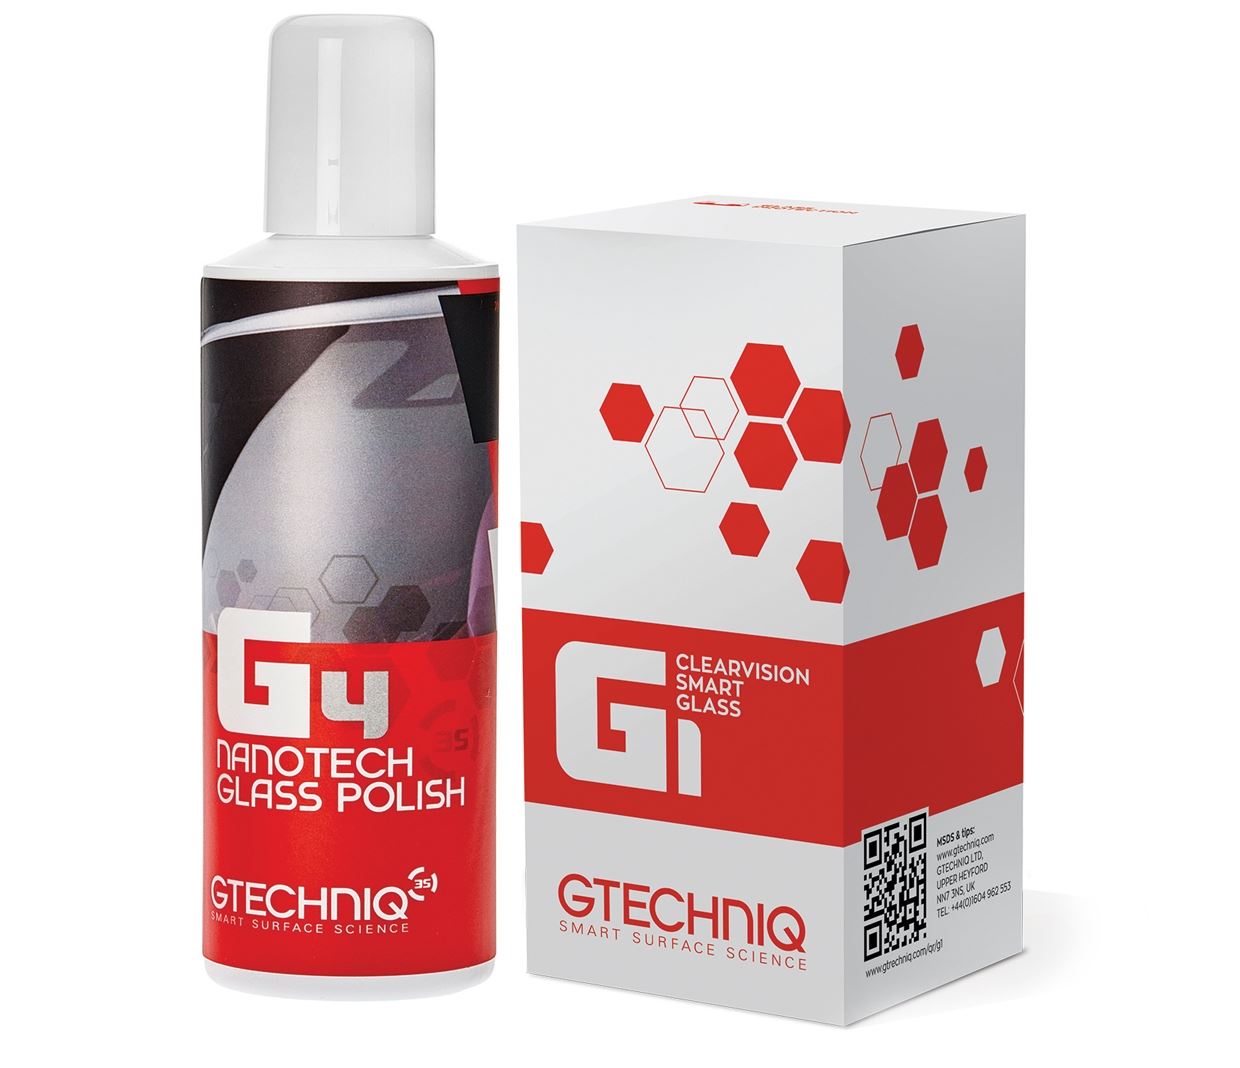 Gtechniq G1 ClearVision Smart Glass Kit